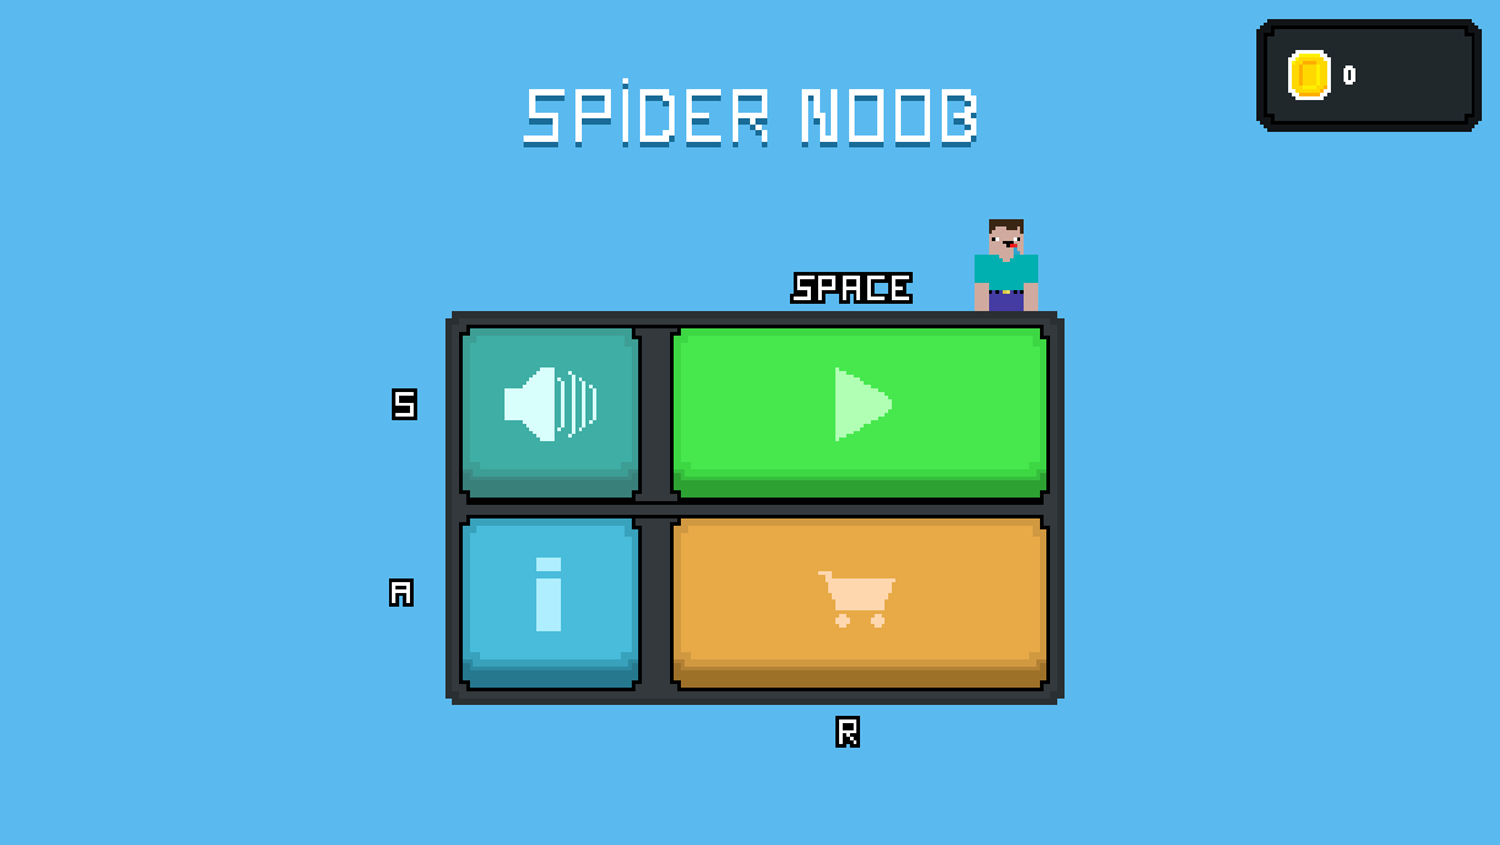 Spider Noob Game Welcome Screen Screenshot.